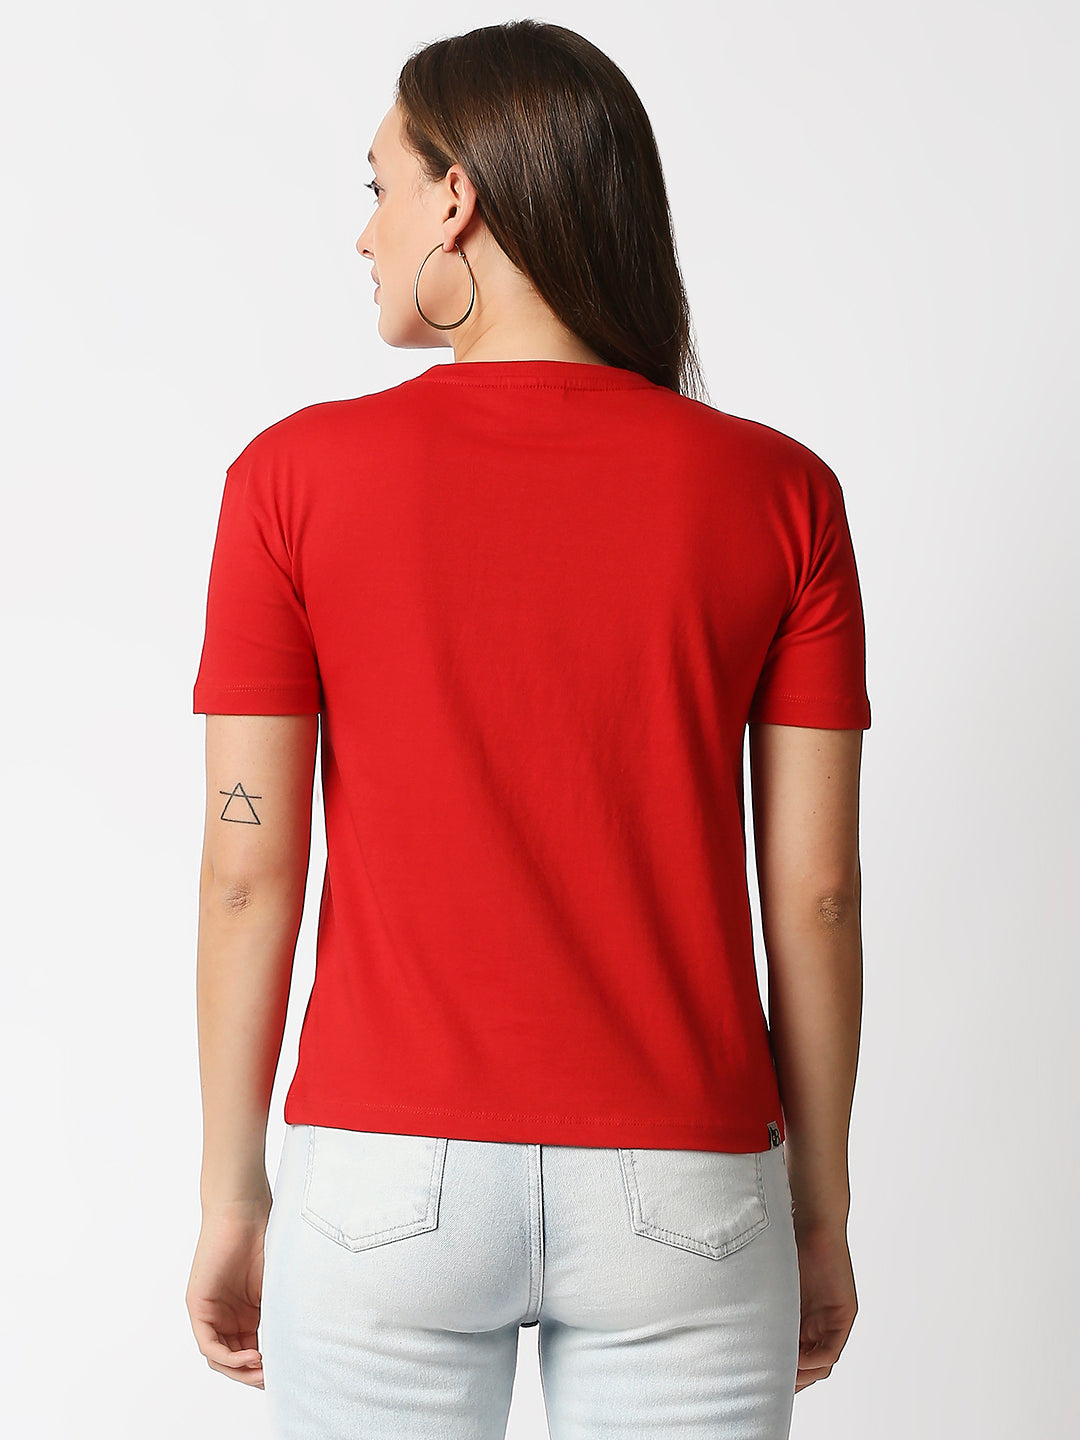 Buy Womenâ€™s Cherry Red Comfort fit Chest print T-shirt.